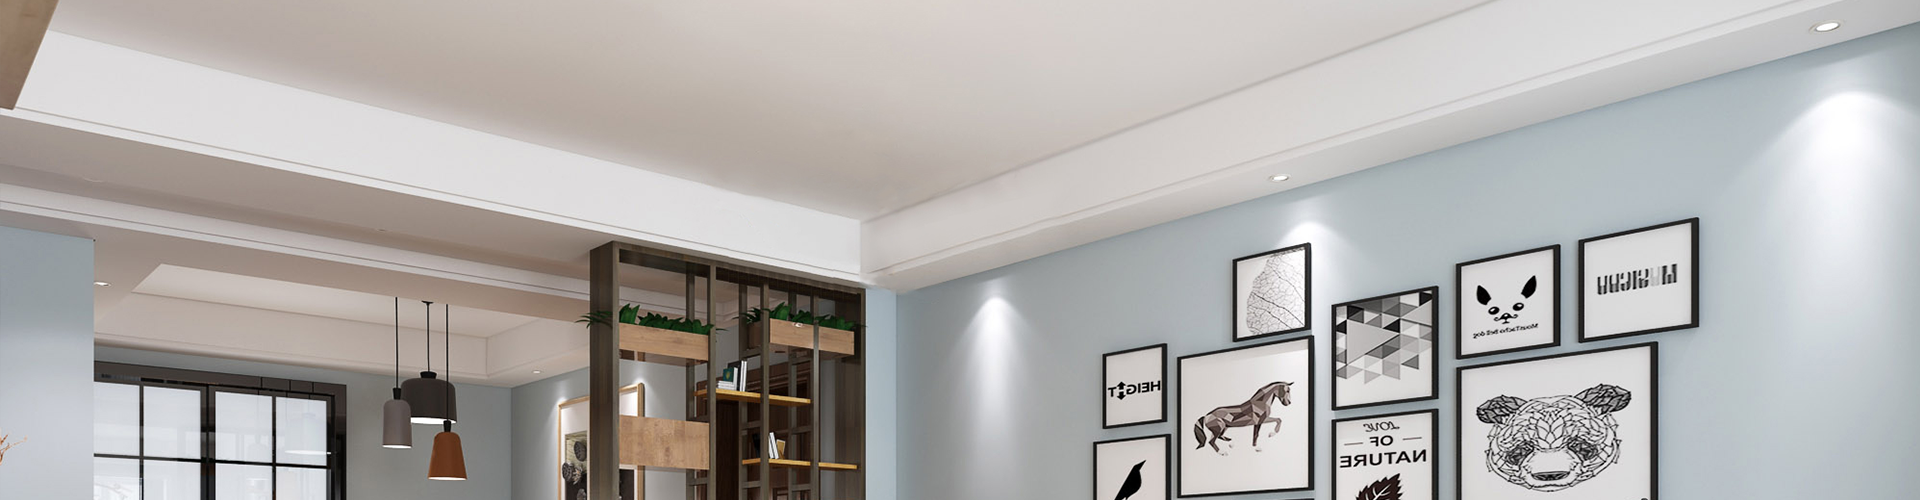 Office indoor ceiling adjustable rimless panel